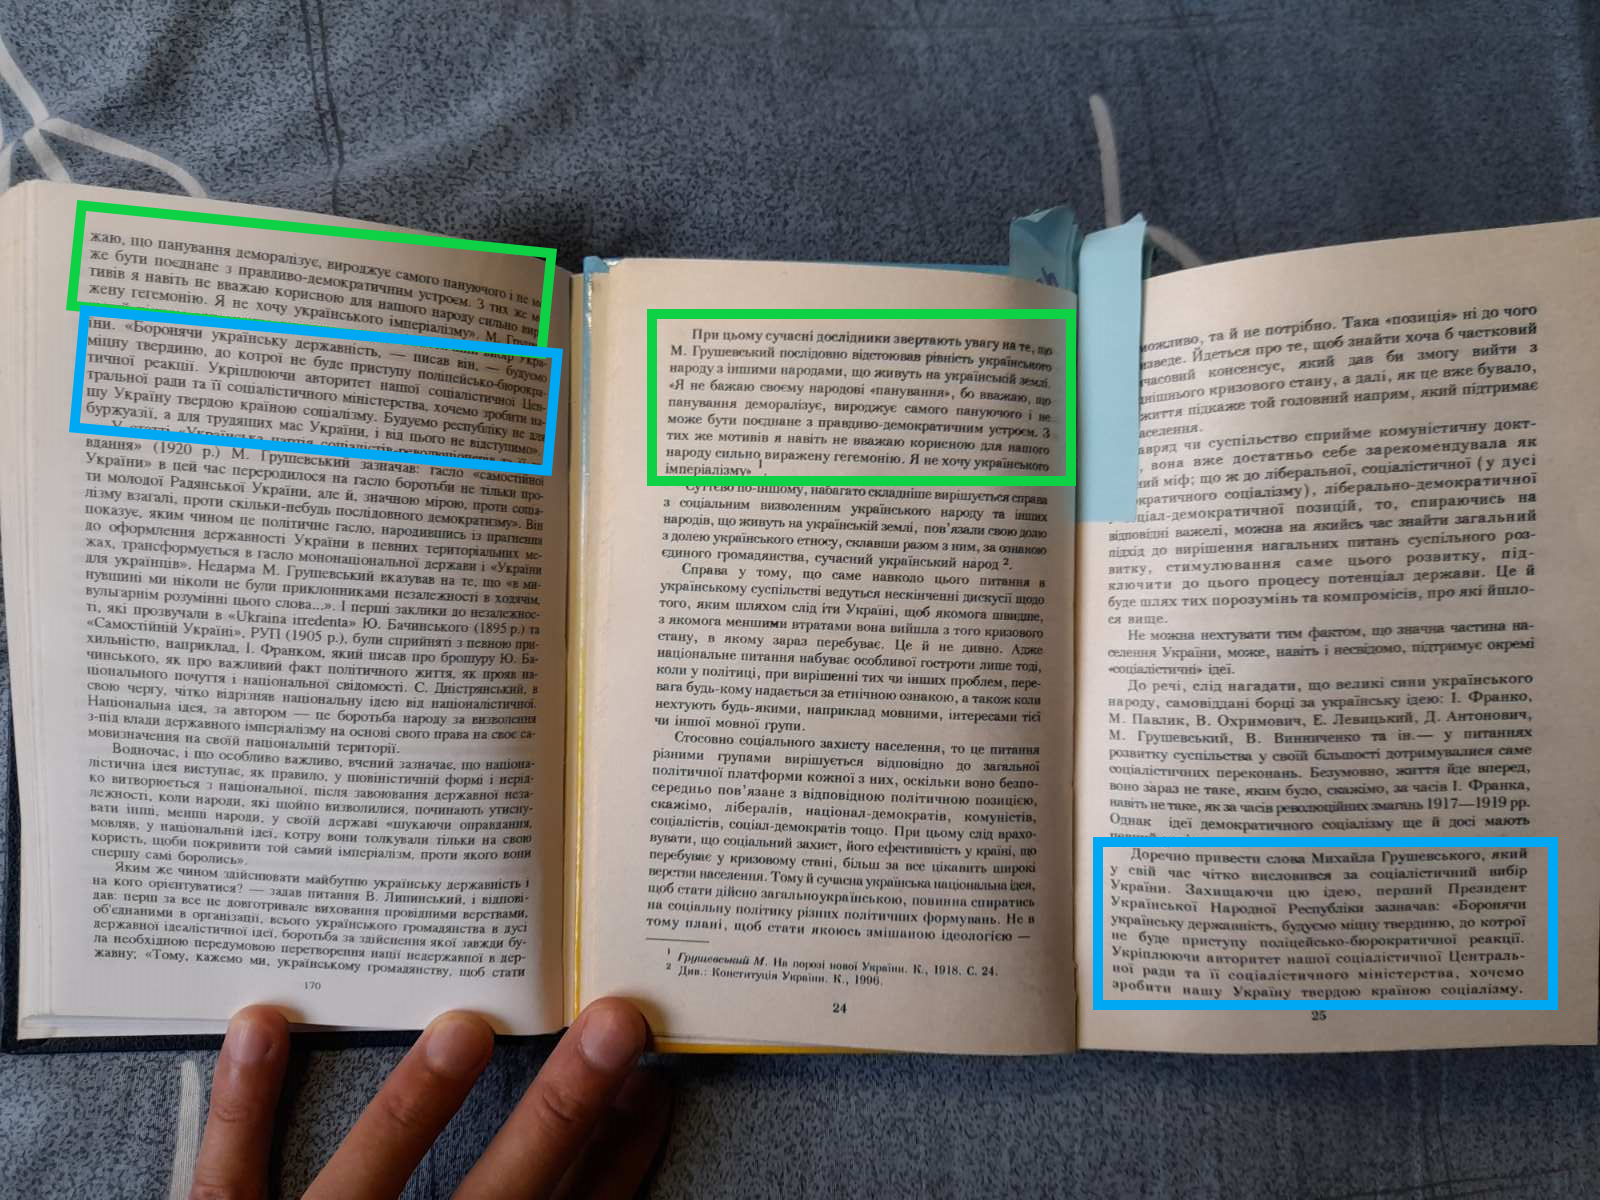 Сопоставка текста из учебника Рымаренко (слева) и работы Медведчука (справа)